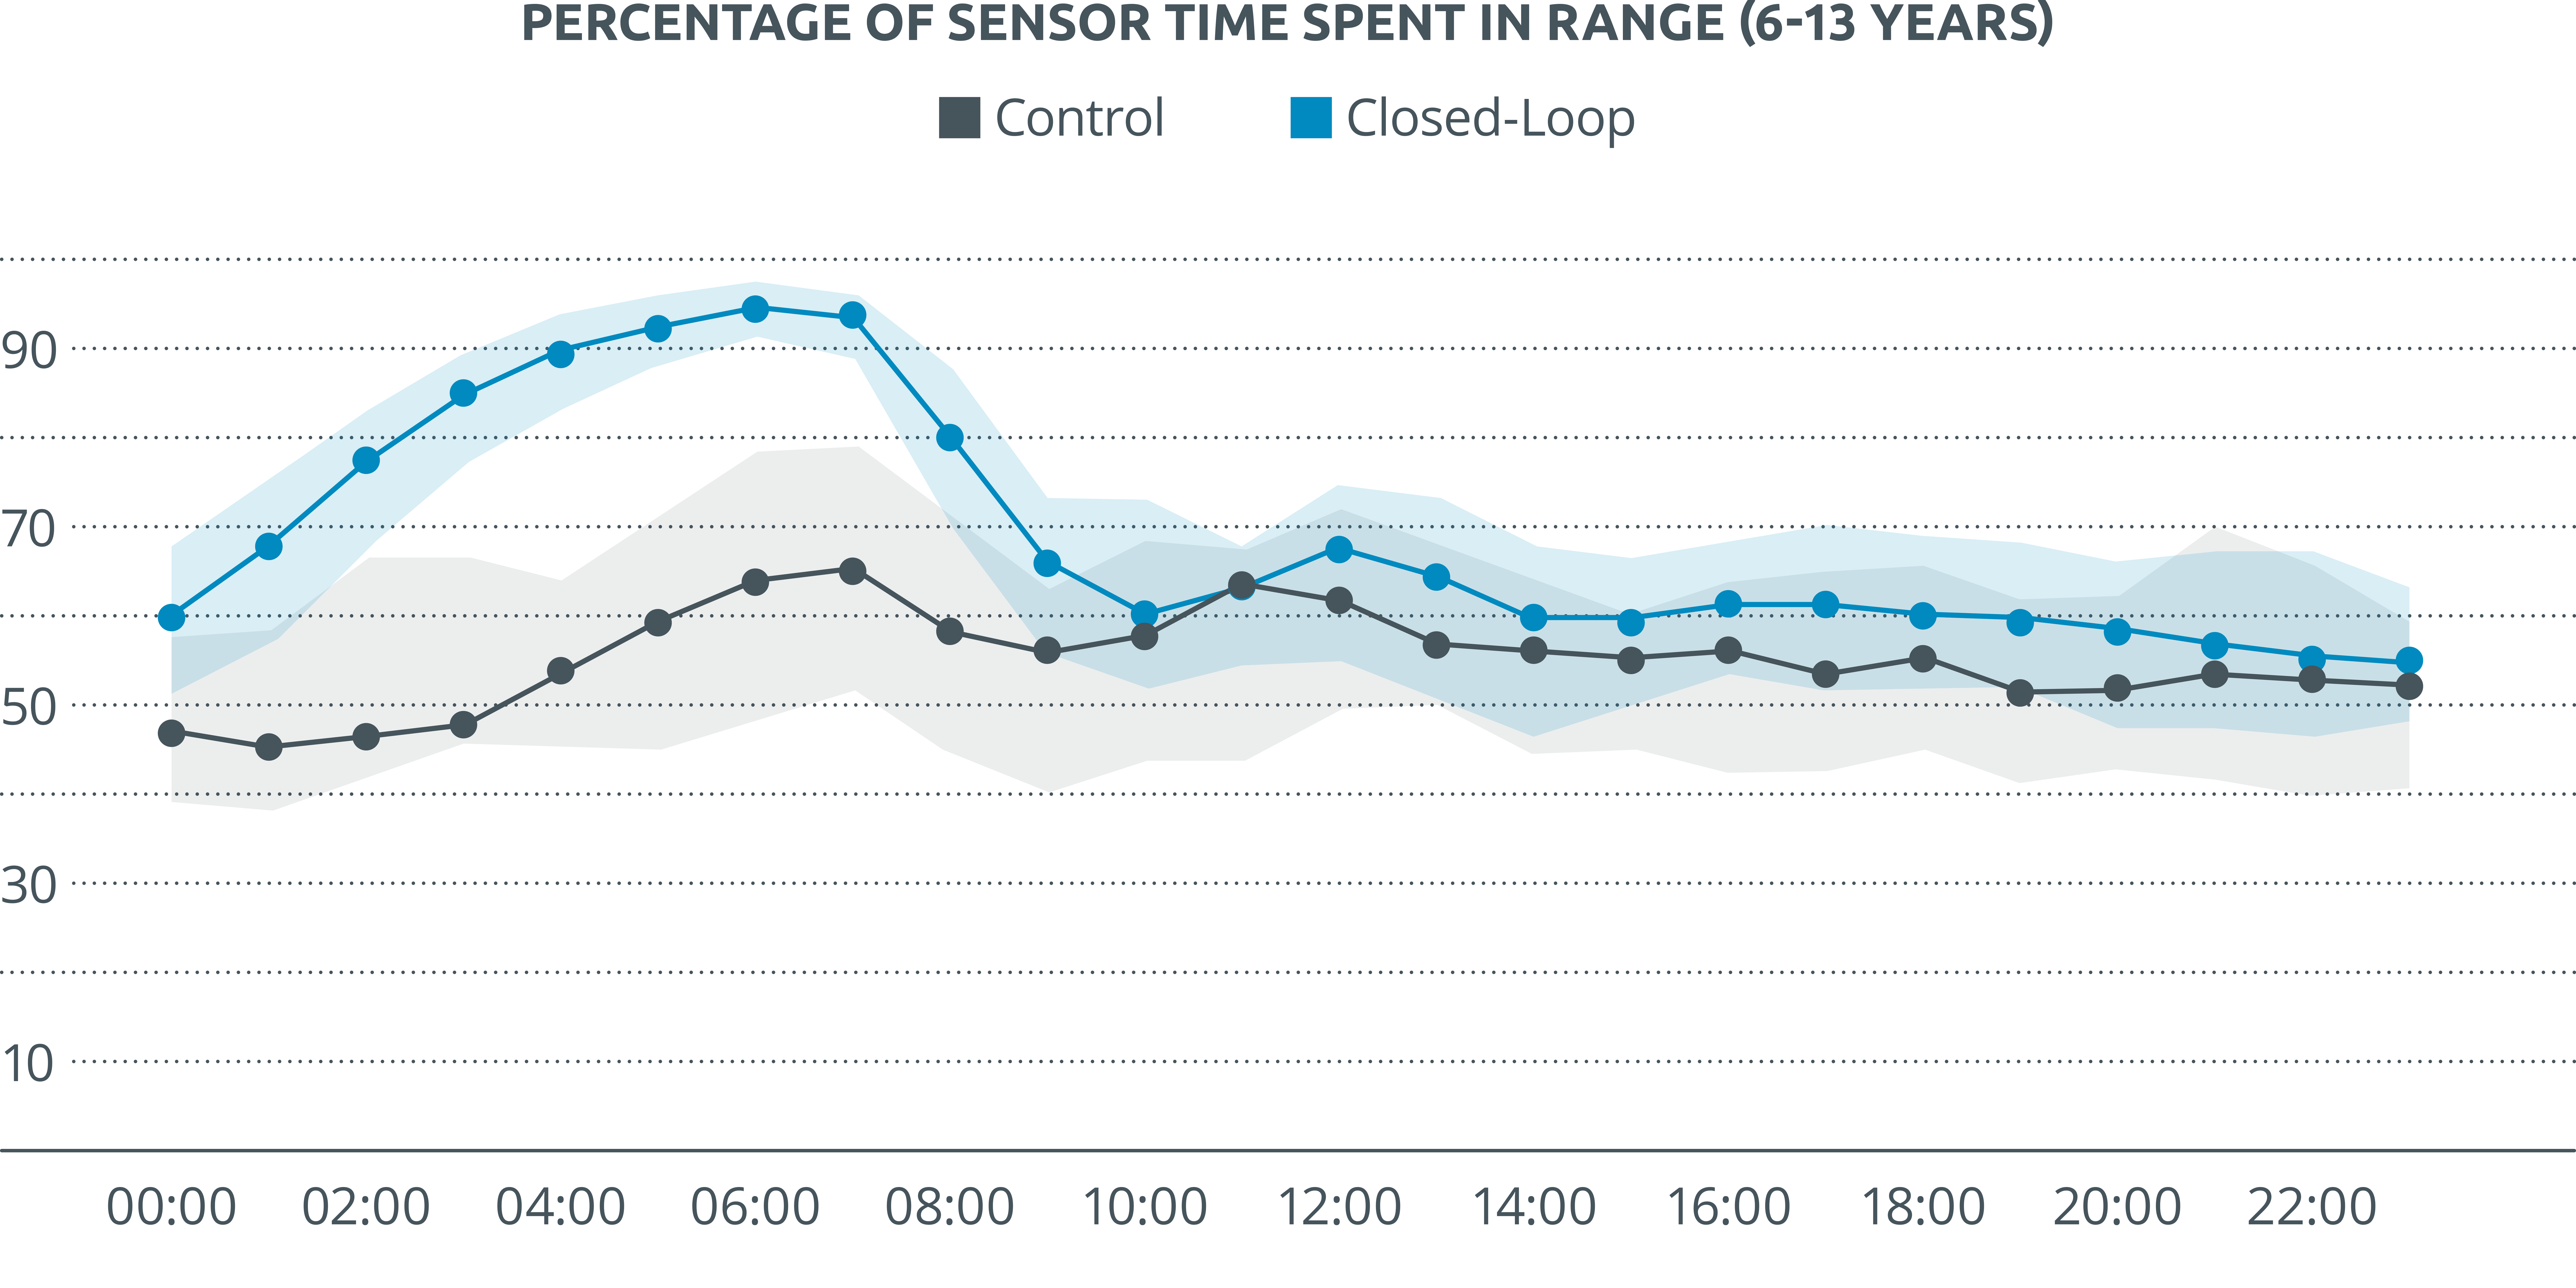 Percentage of Sensor Time Spent in Range (6-13 Years)